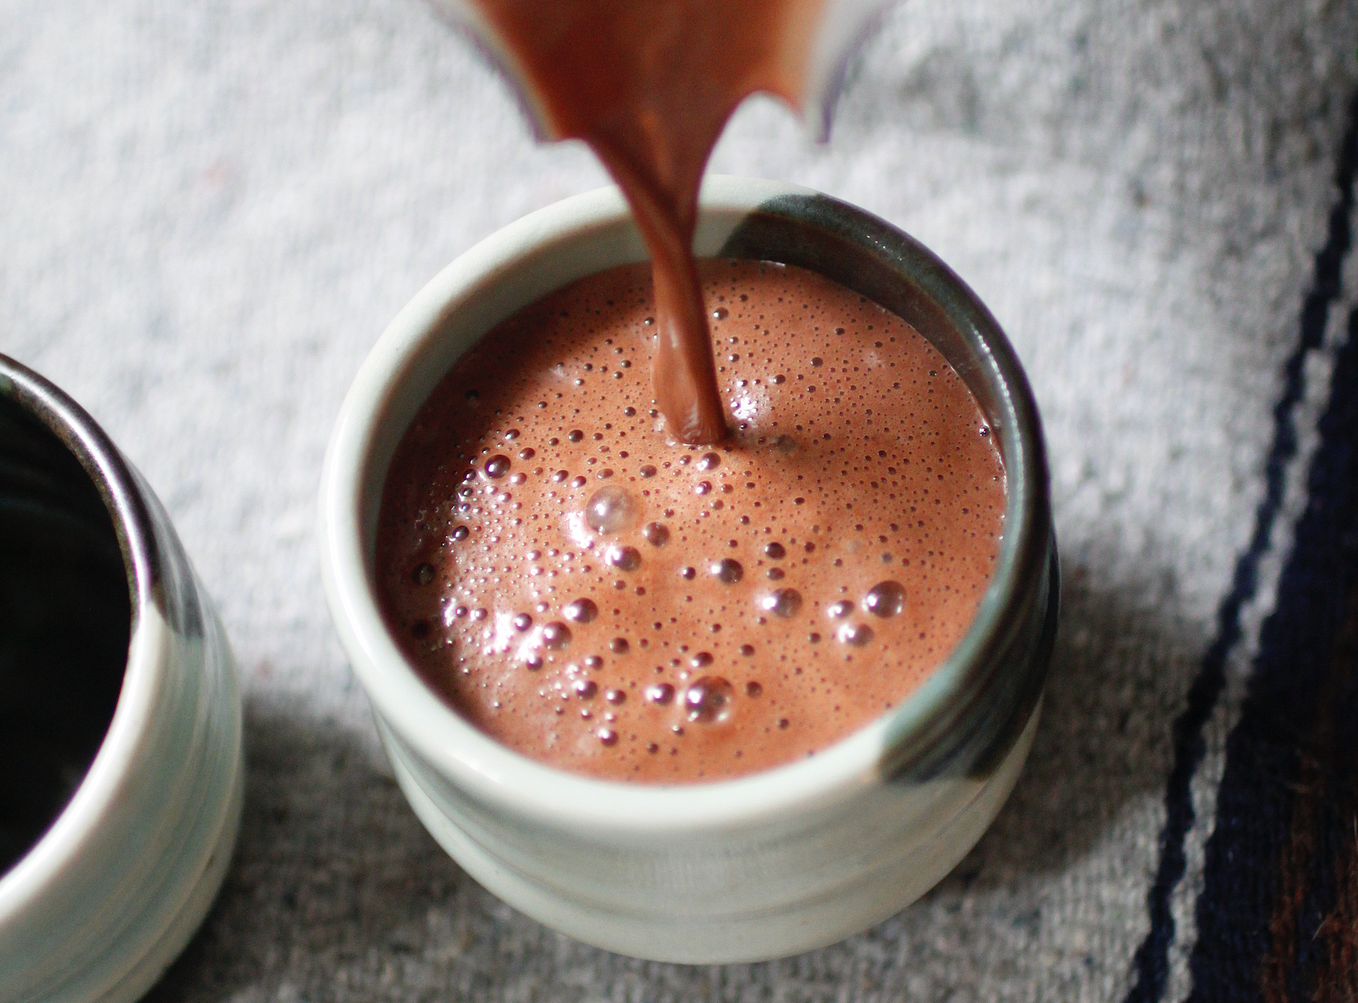 Cacao Saucepan – Koracao